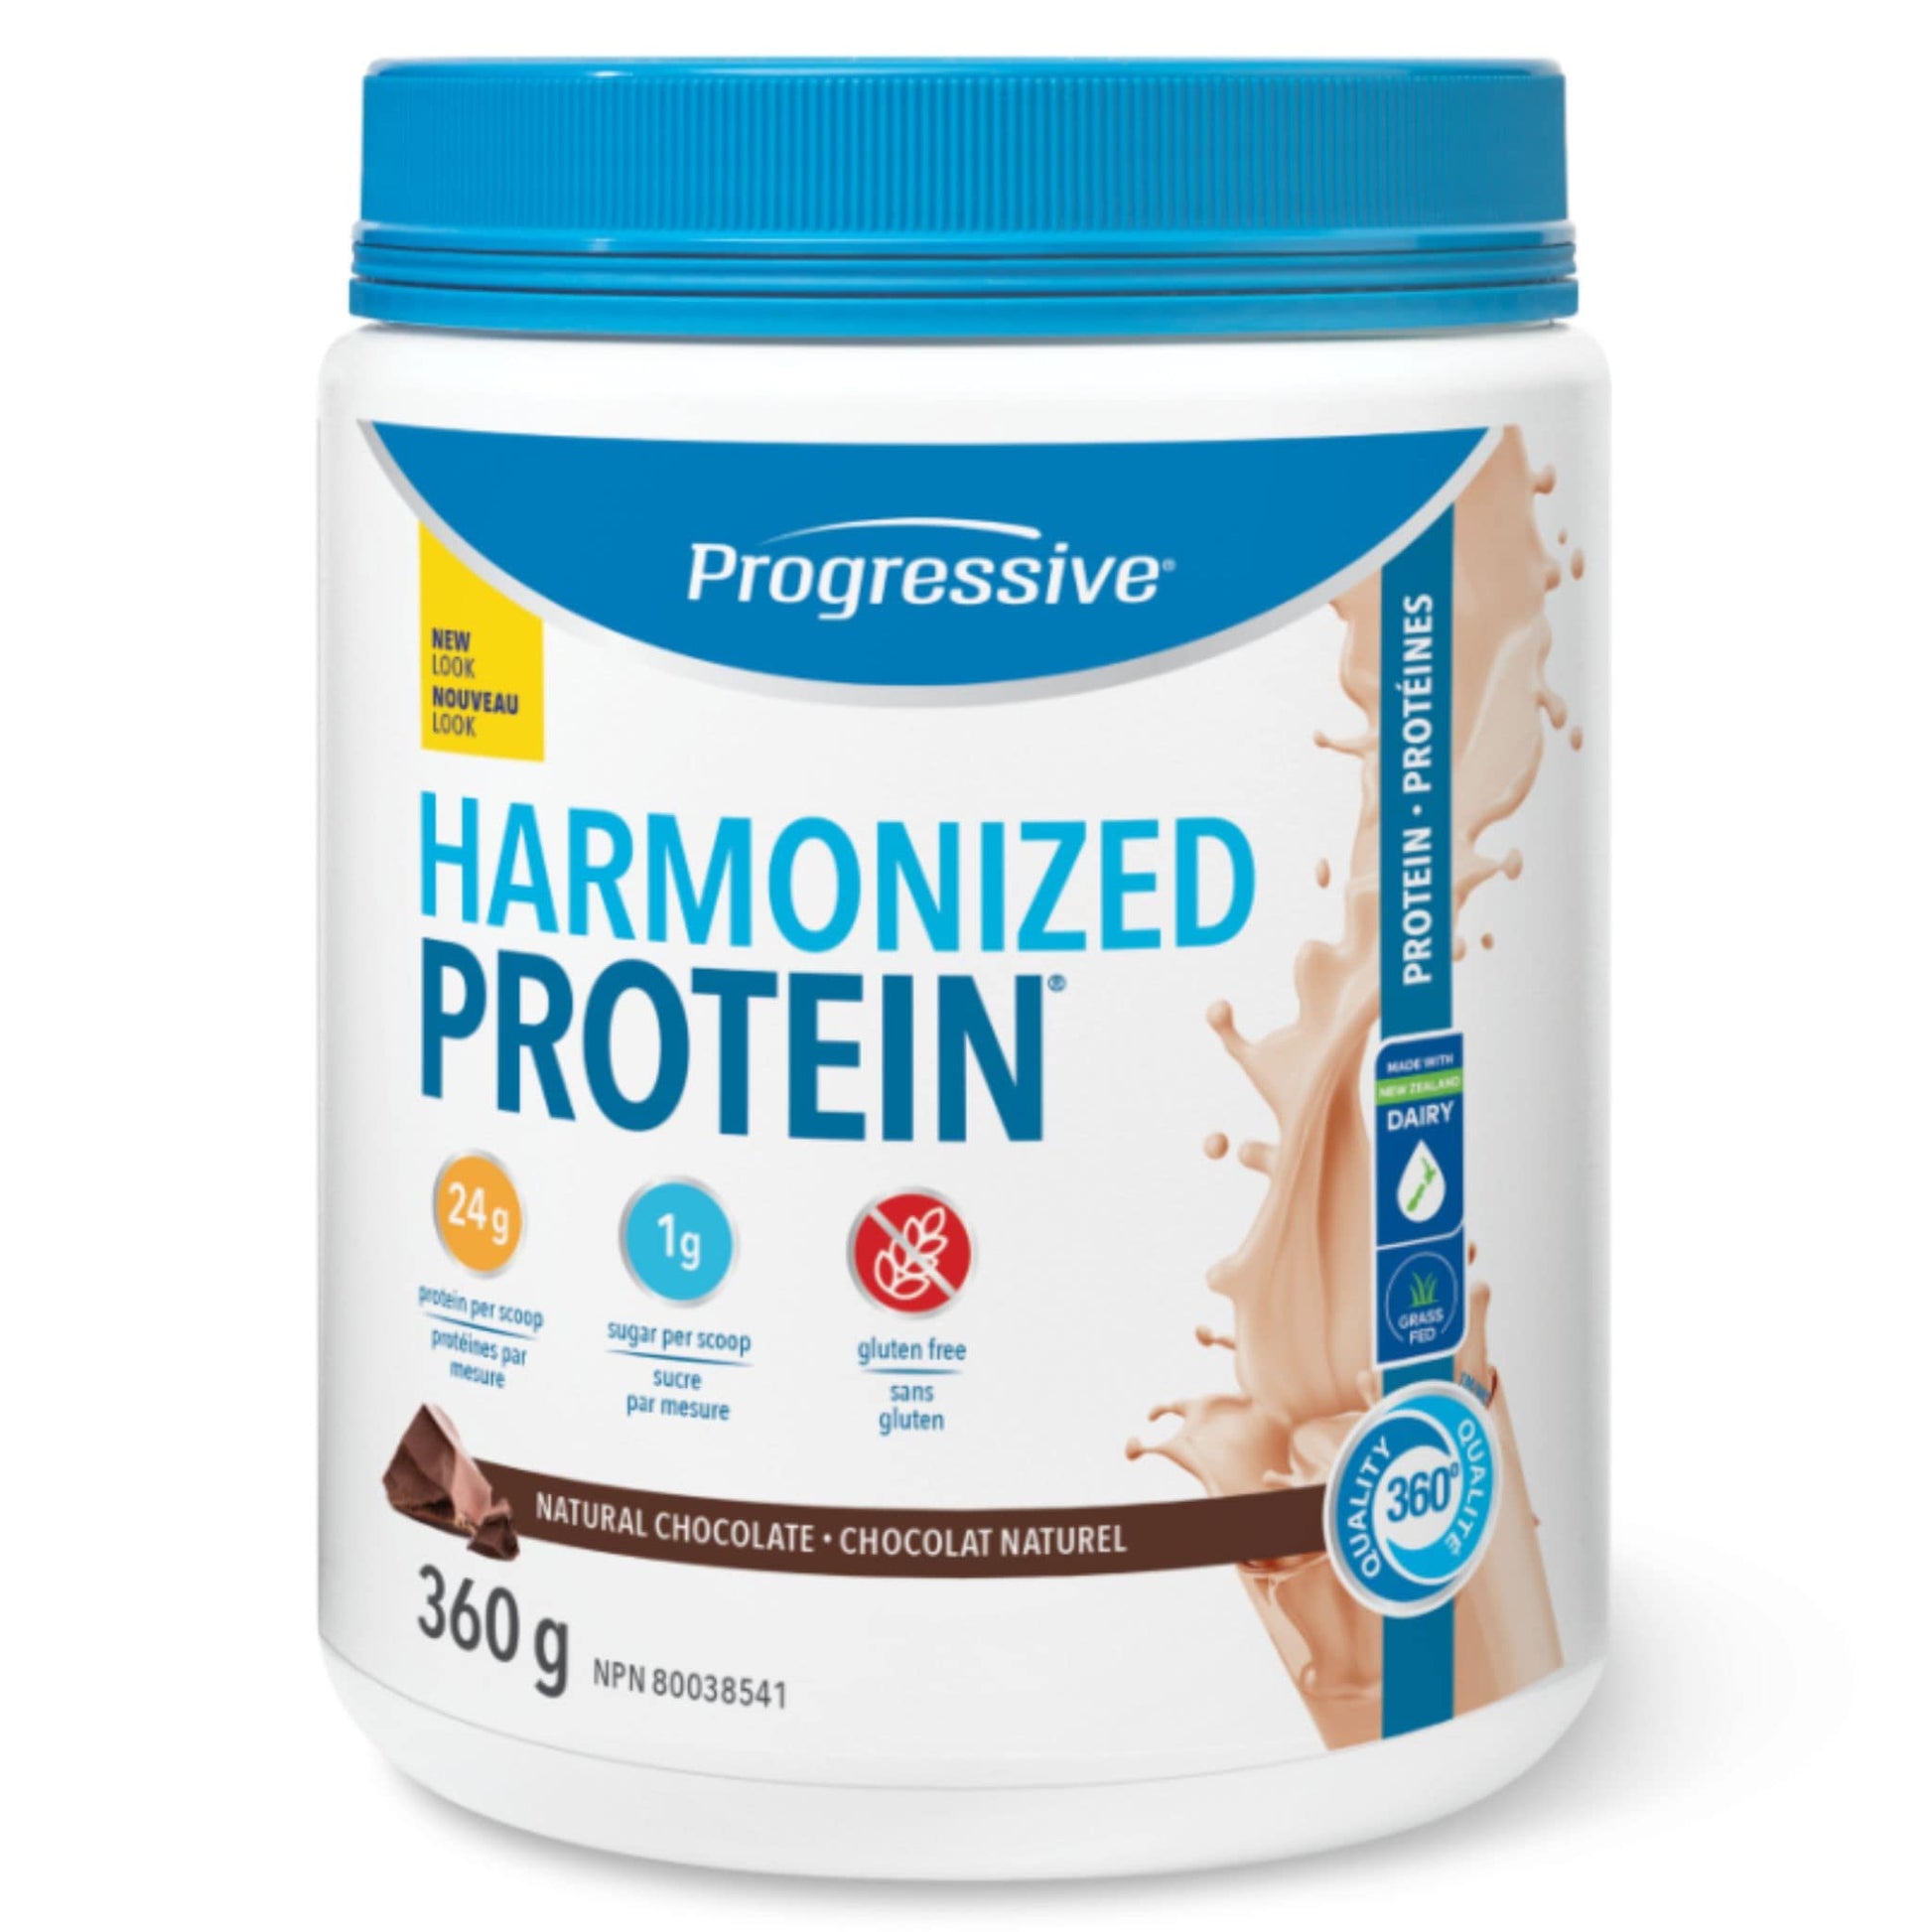 Natural Chocolate 360g | Progressive Harmonized Protein Powder